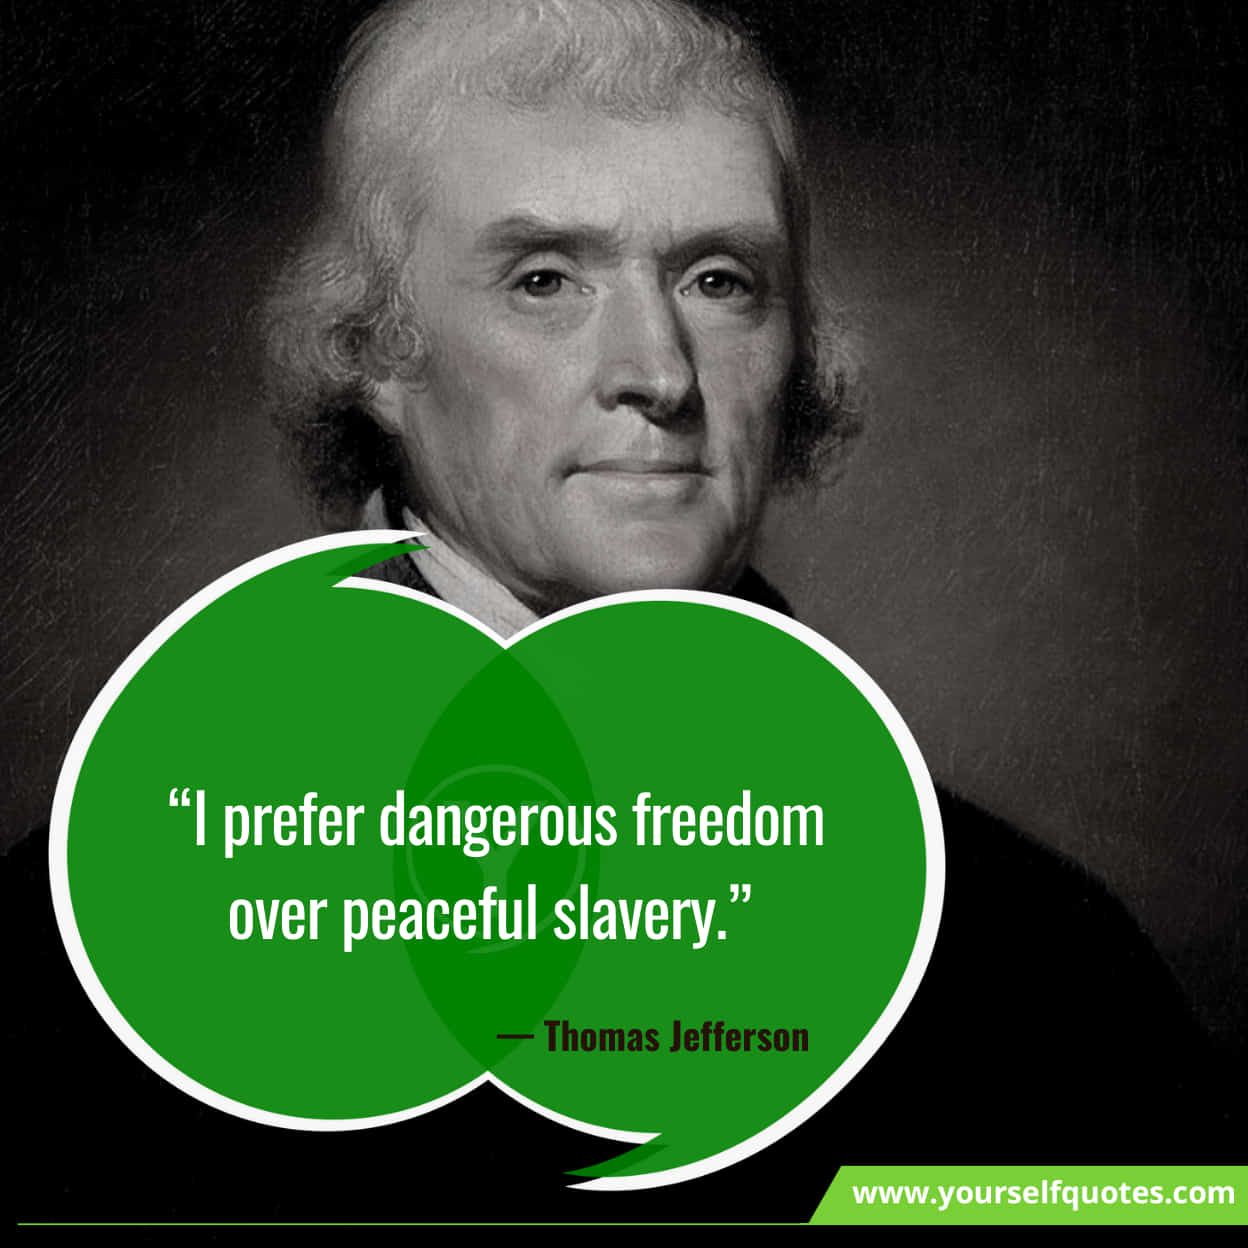 Thomas Jefferson’s Quotes On Freedom